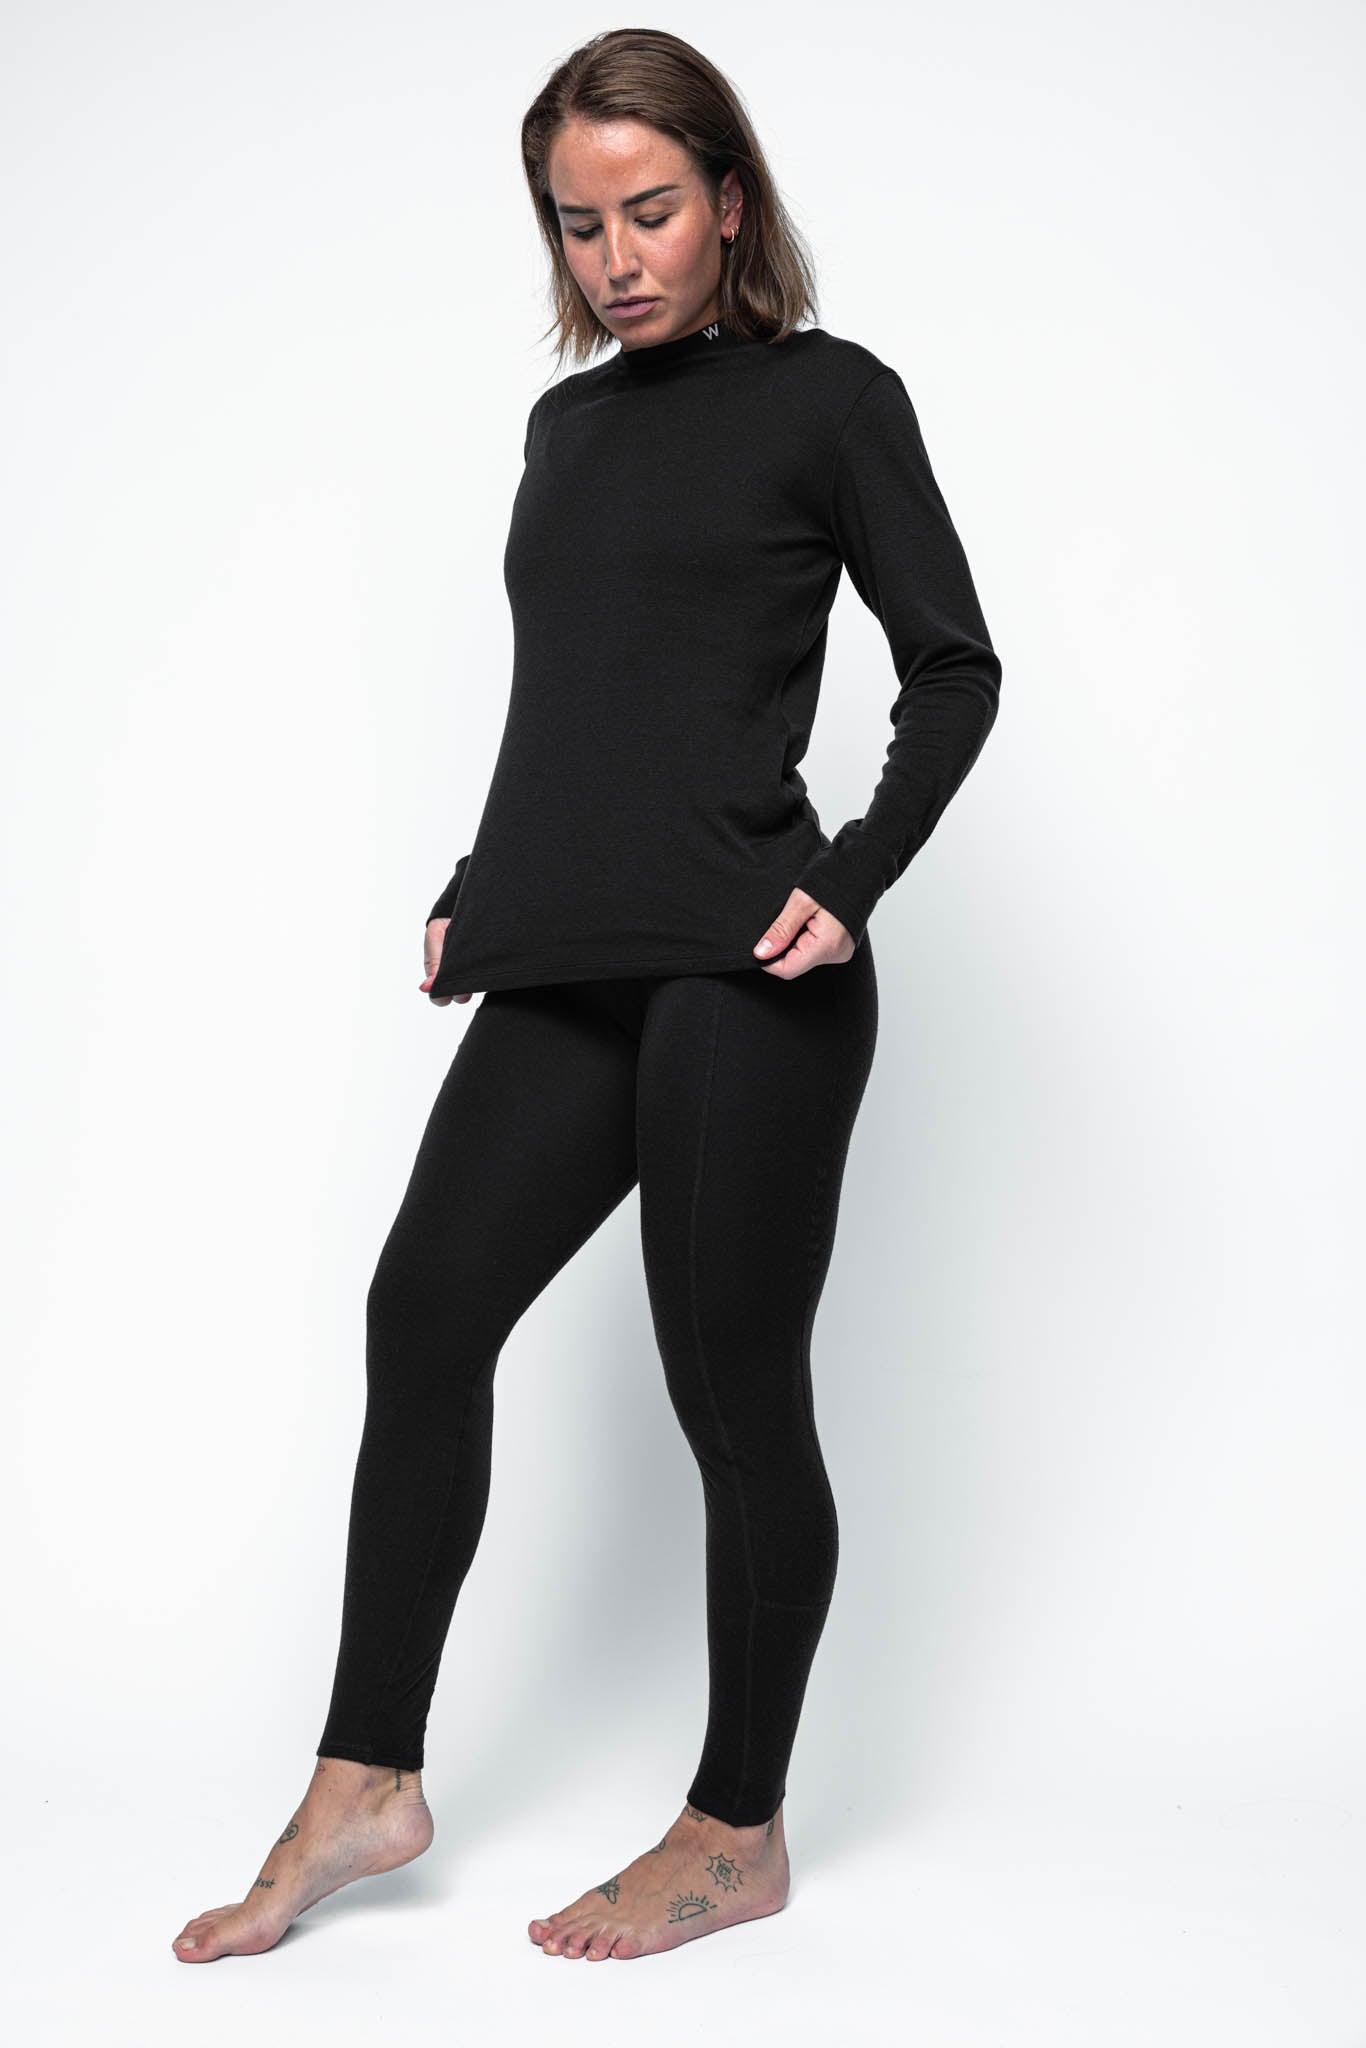 Women's merino wool legging underwear - MT500